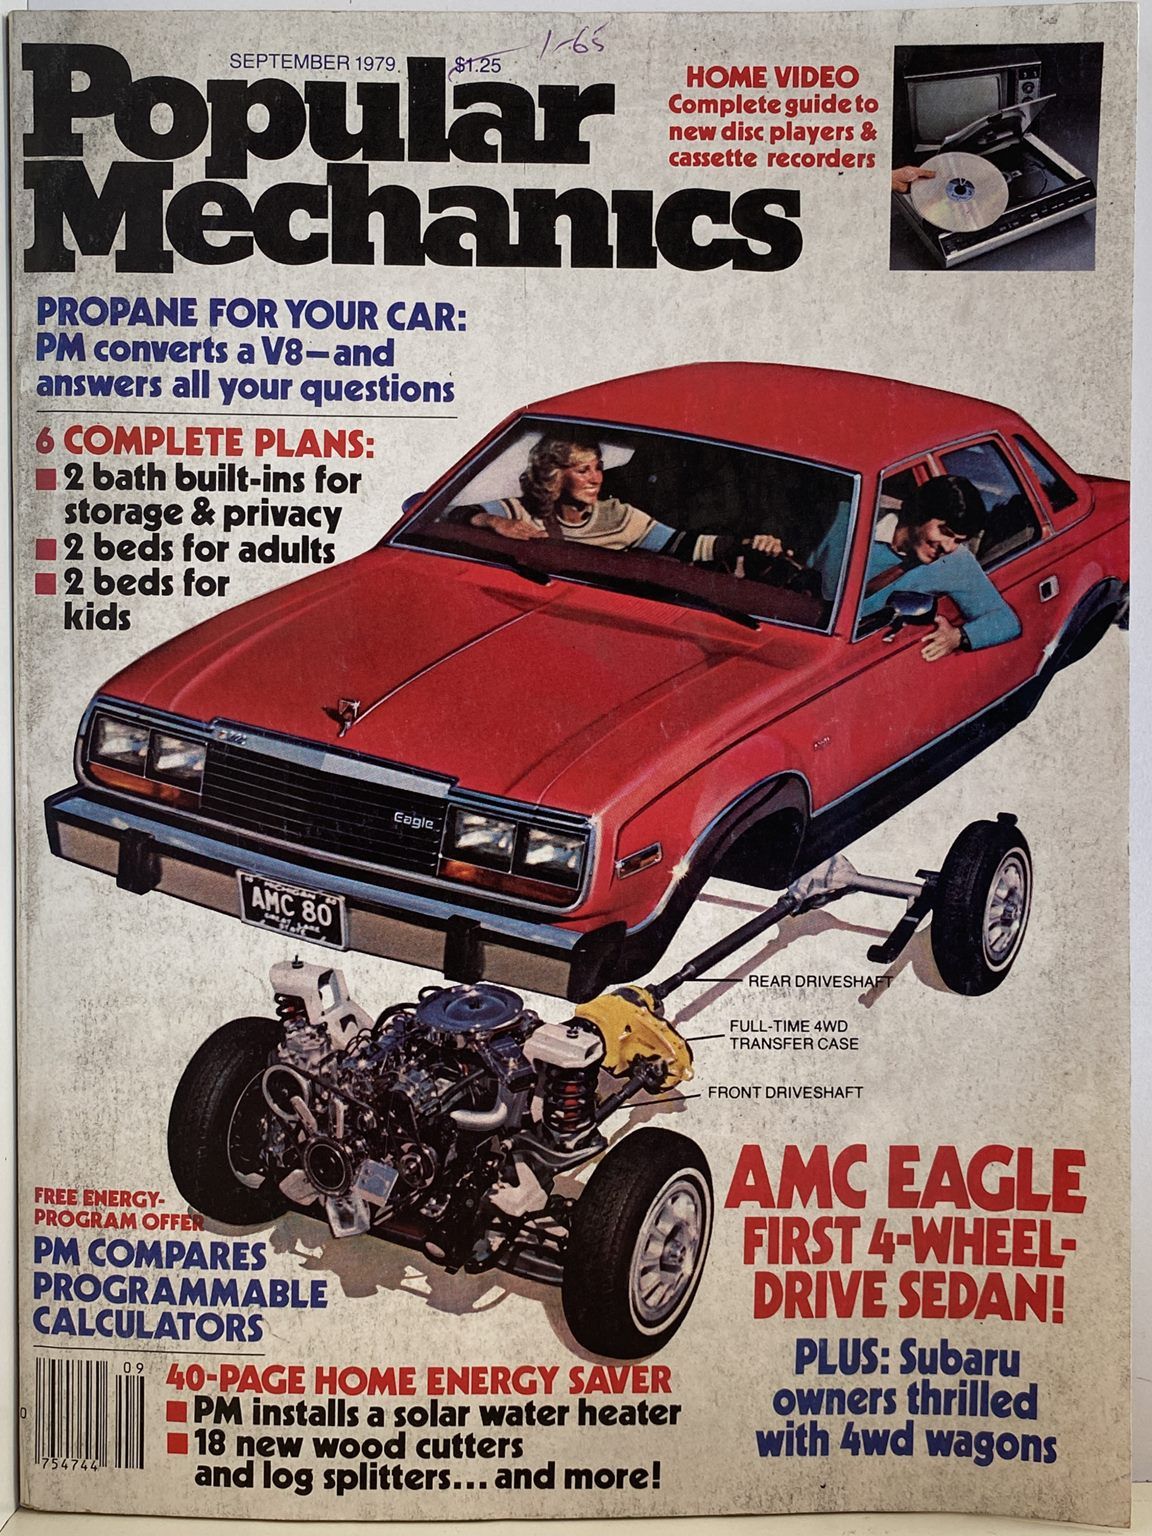 VINTAGE MAGAZINE: Popular Mechanics - Vol. 152, No. 3 - September 1979